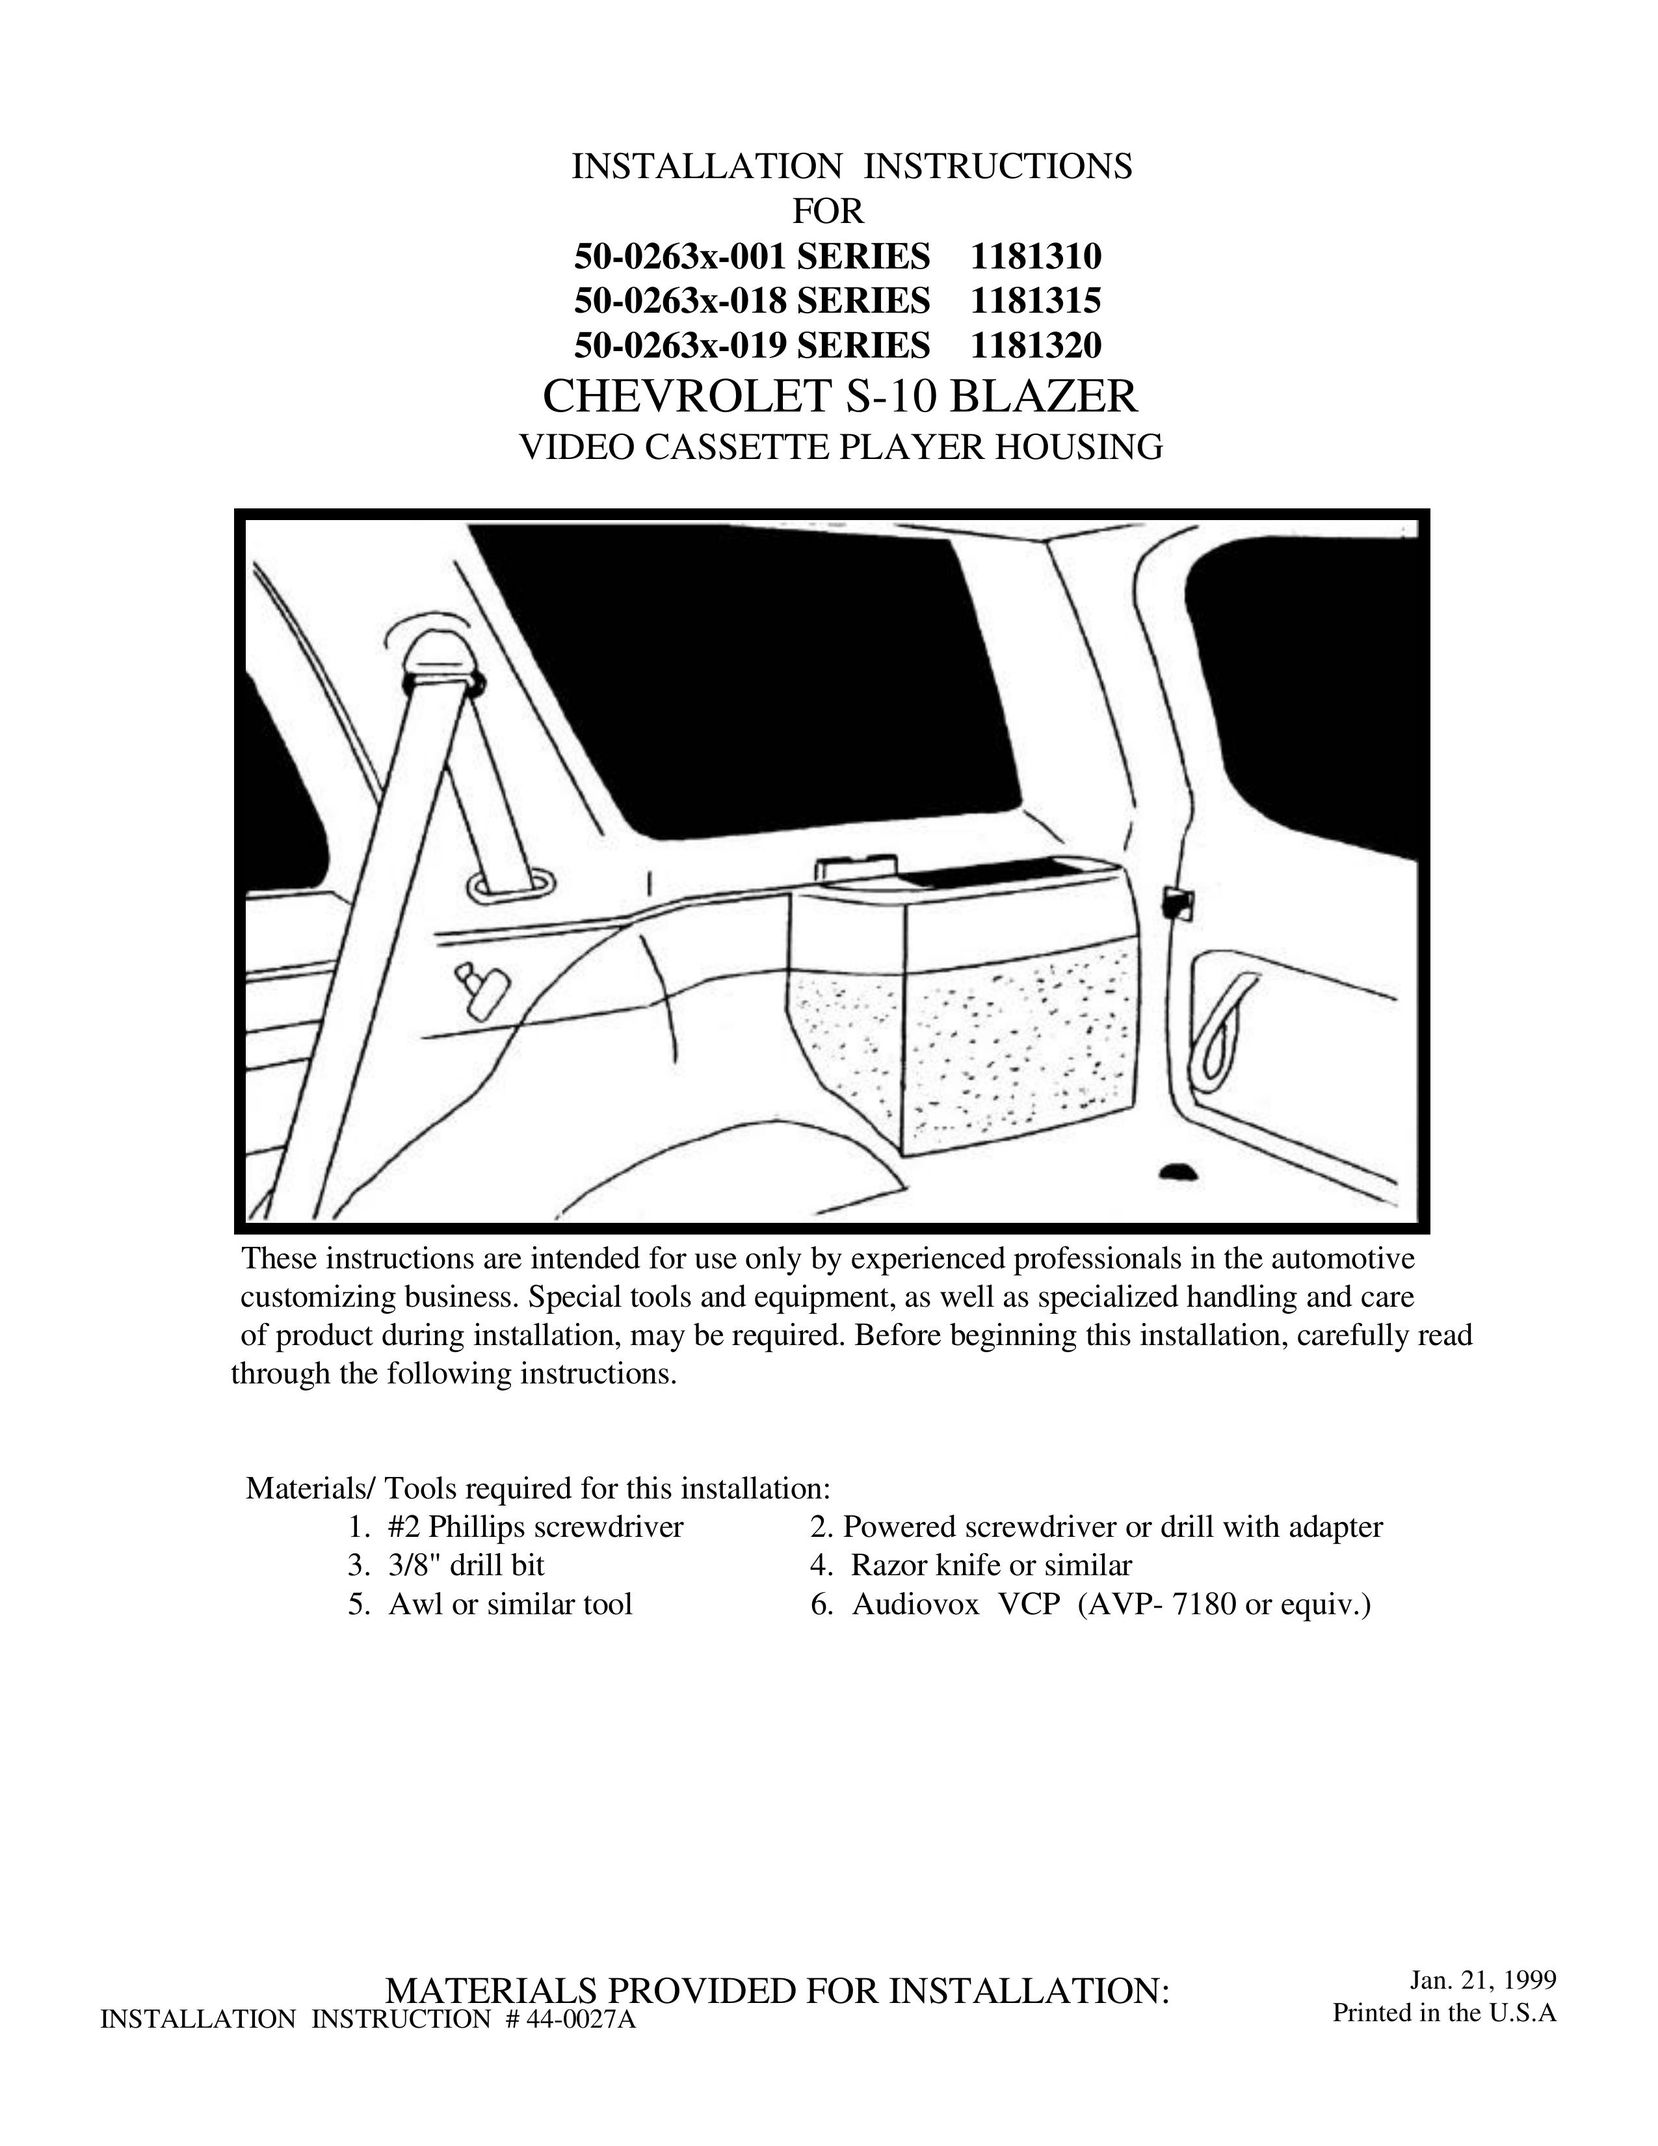 Audiovox 50-0263x-001 SERIES VCR User Manual